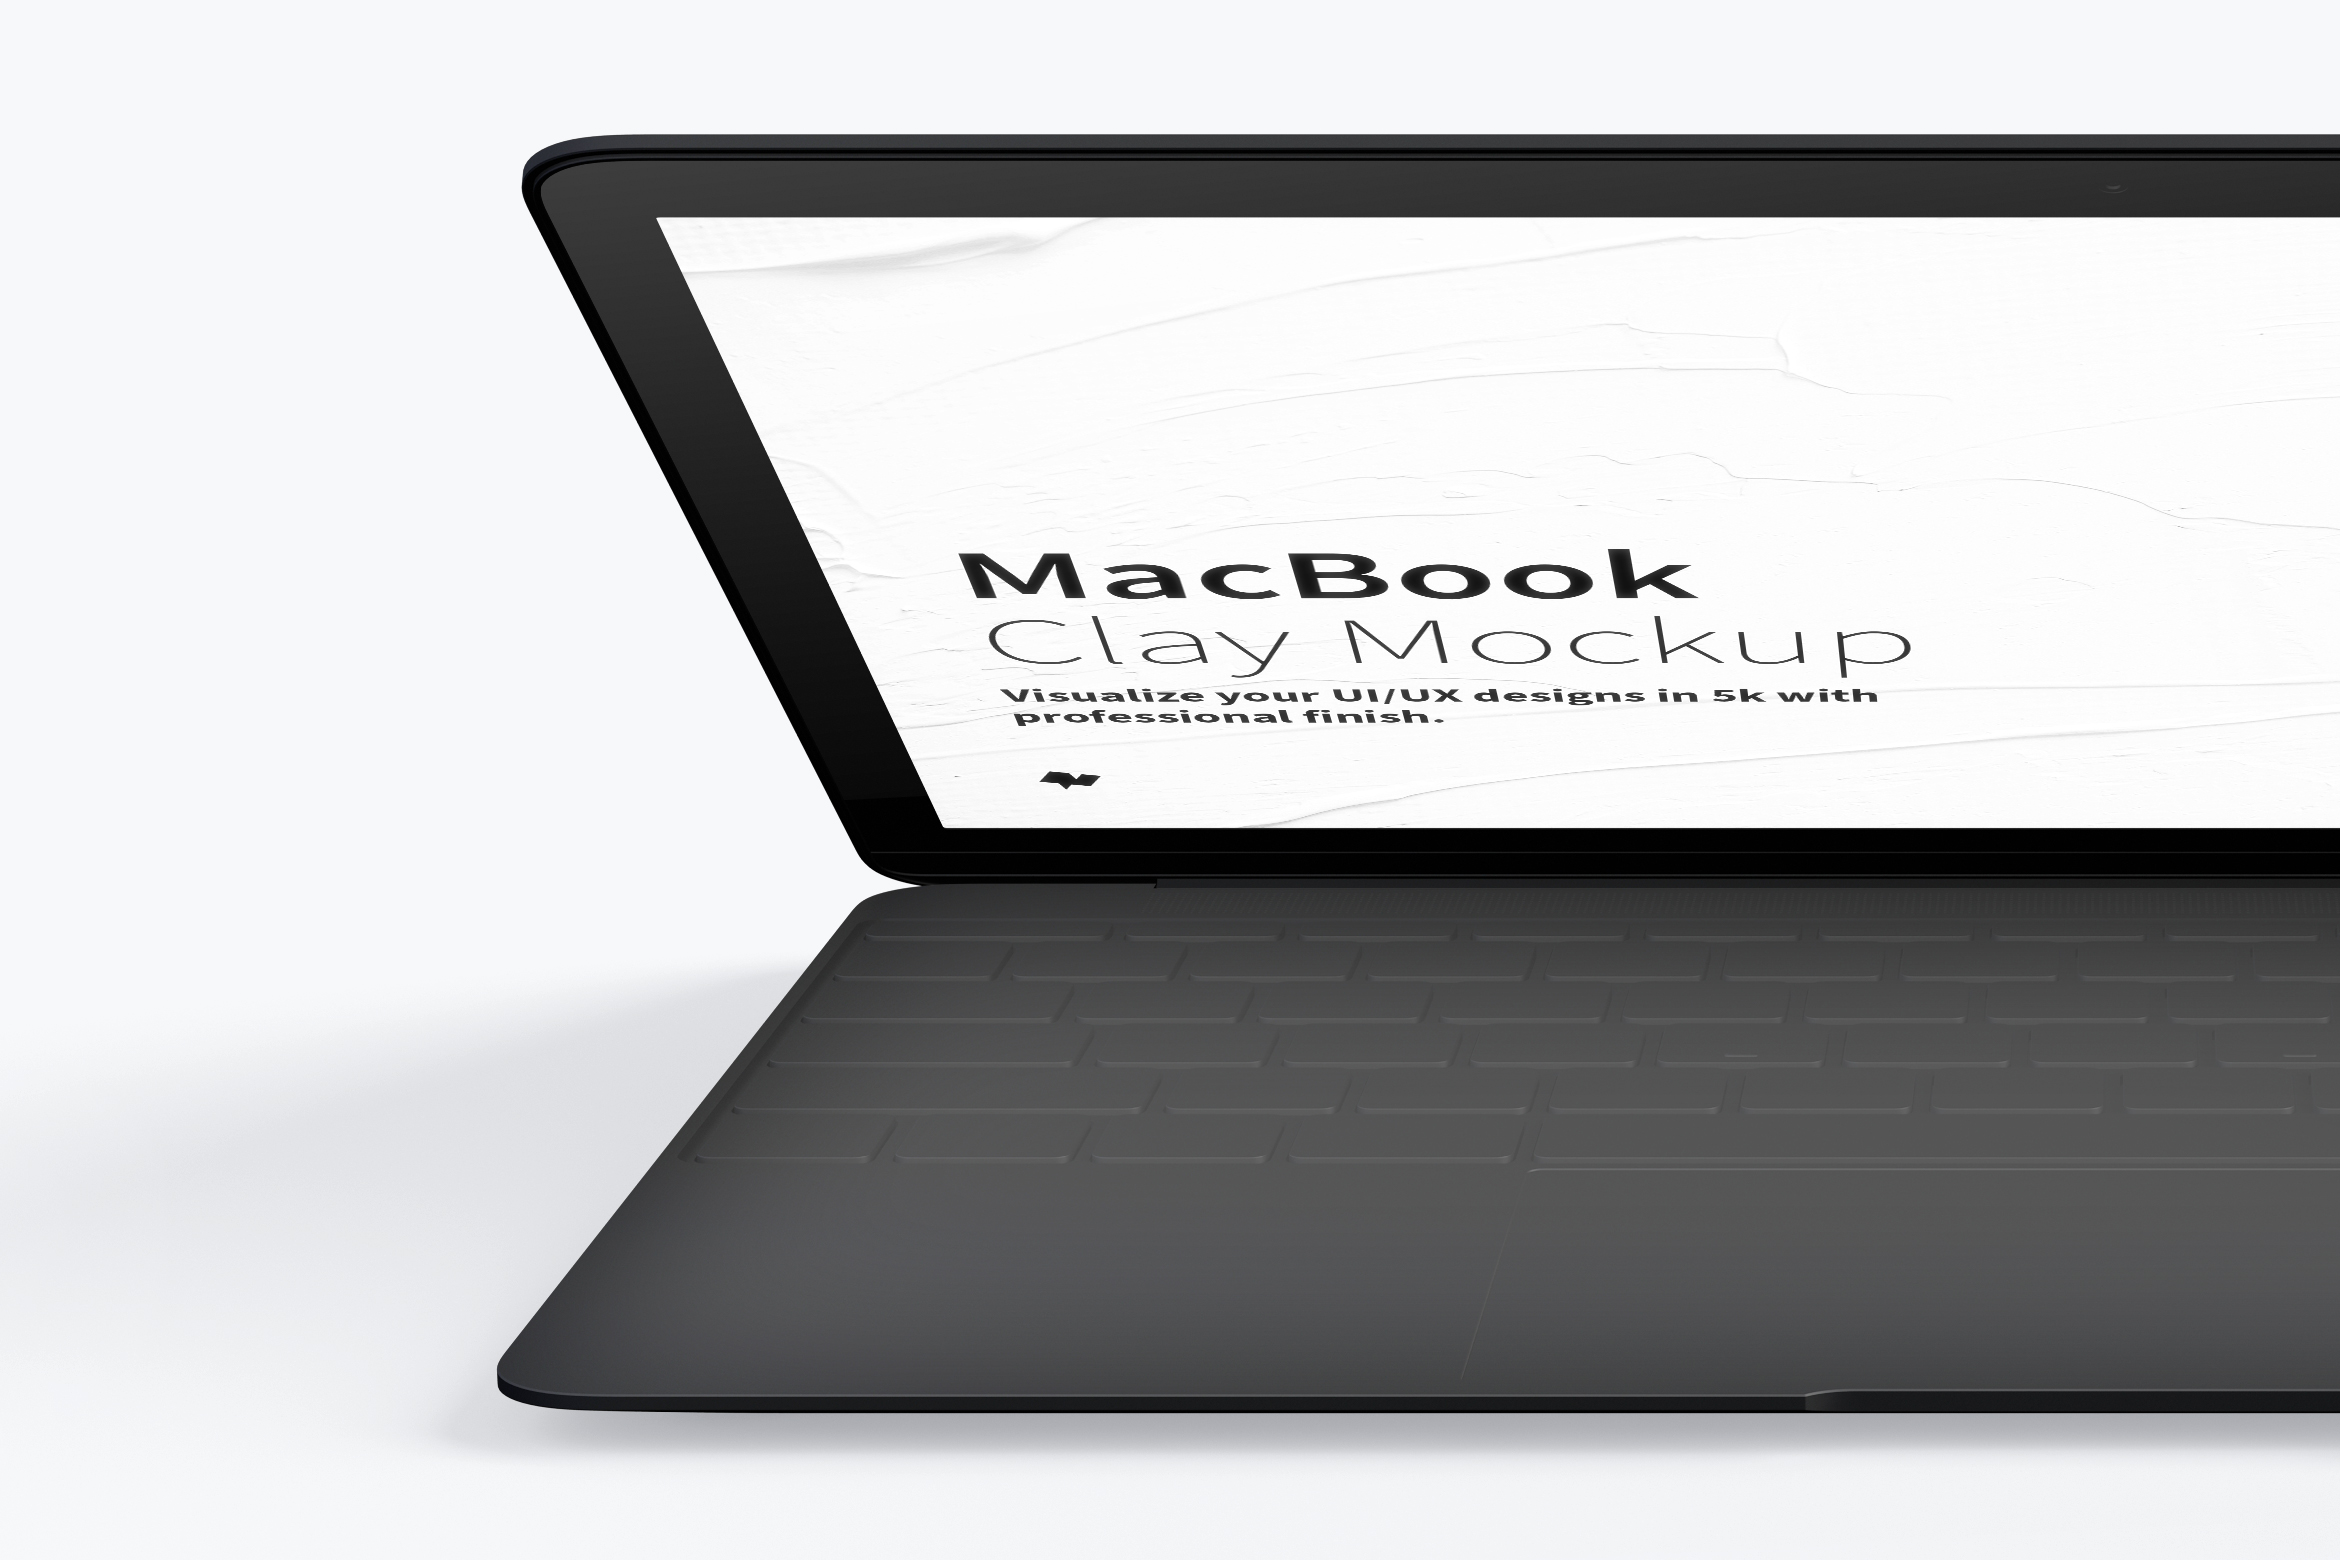 MacBook笔记本电脑前视图黏土样机02 Clay MacBook Mockup, Front View 02插图(1)